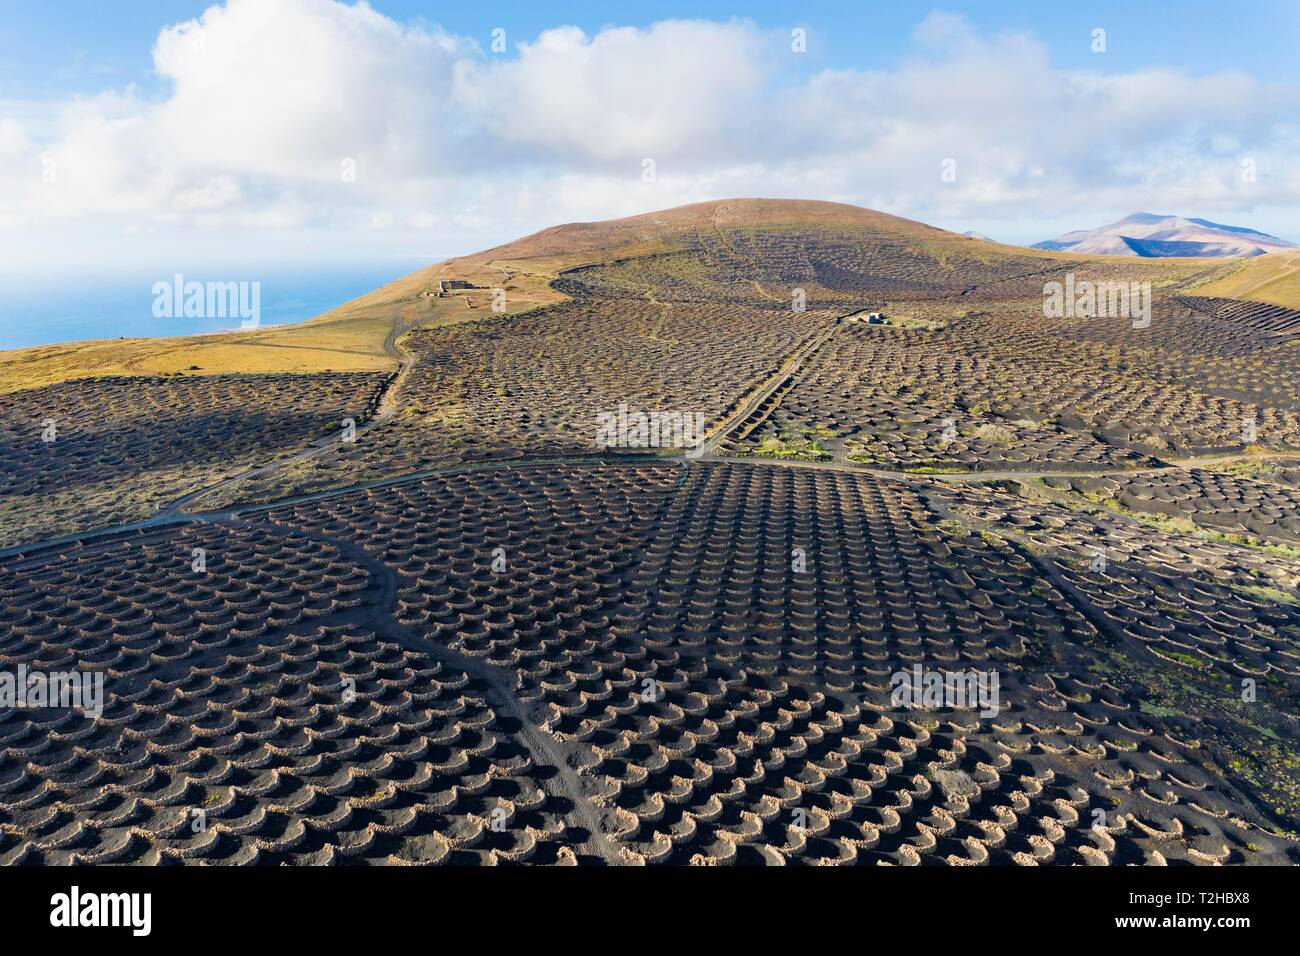 Vineyard La Geria, mountain Tinasoria, near Yaiza, drone shot, Lanzarote, Canary Islands, Spain Stock Photo